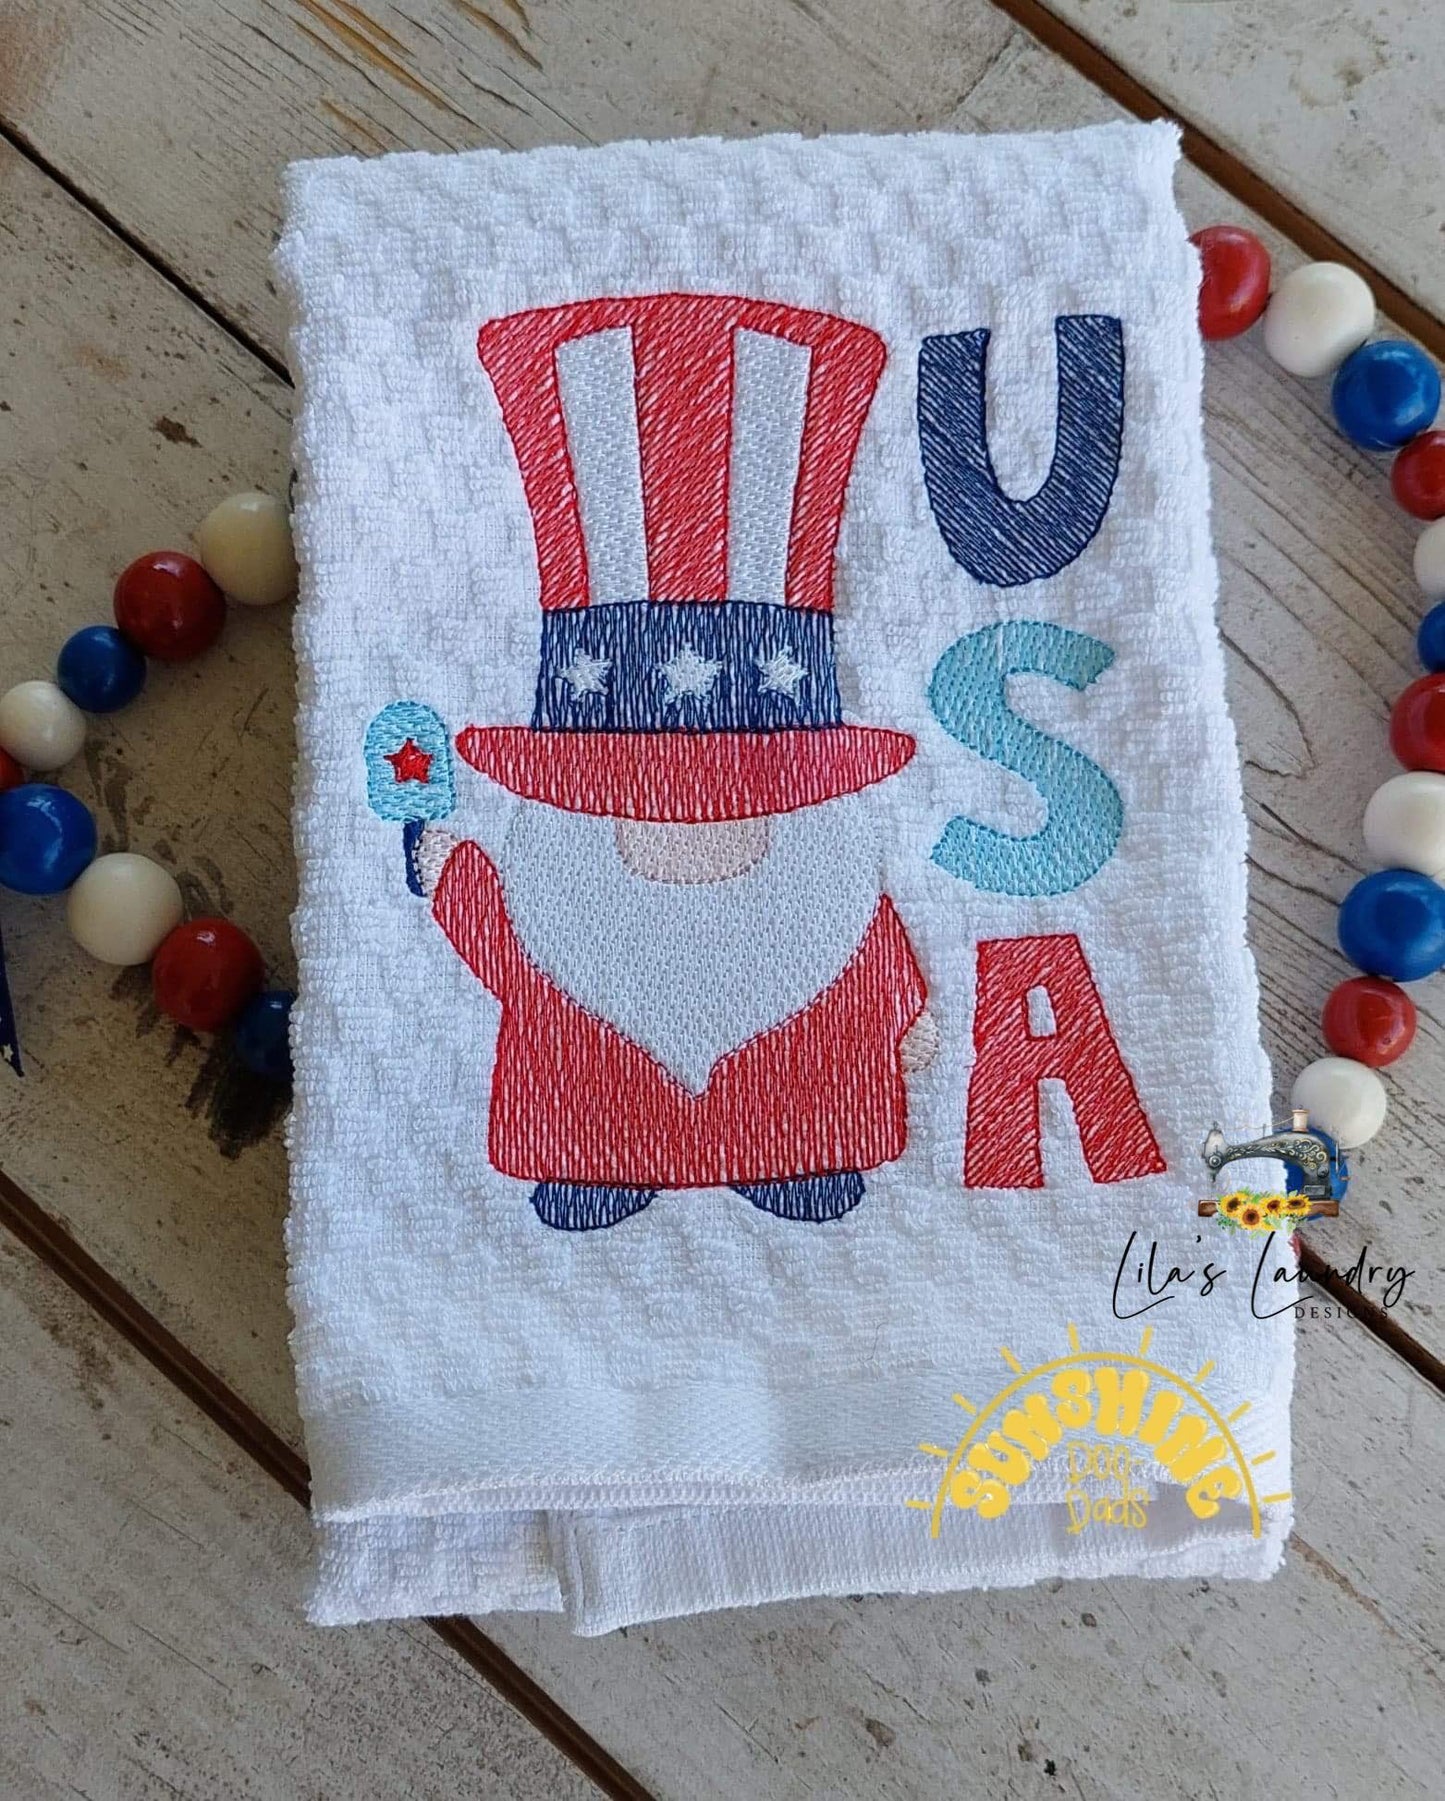 USA Gnome - 3 sizes- Digital Embroidery Design